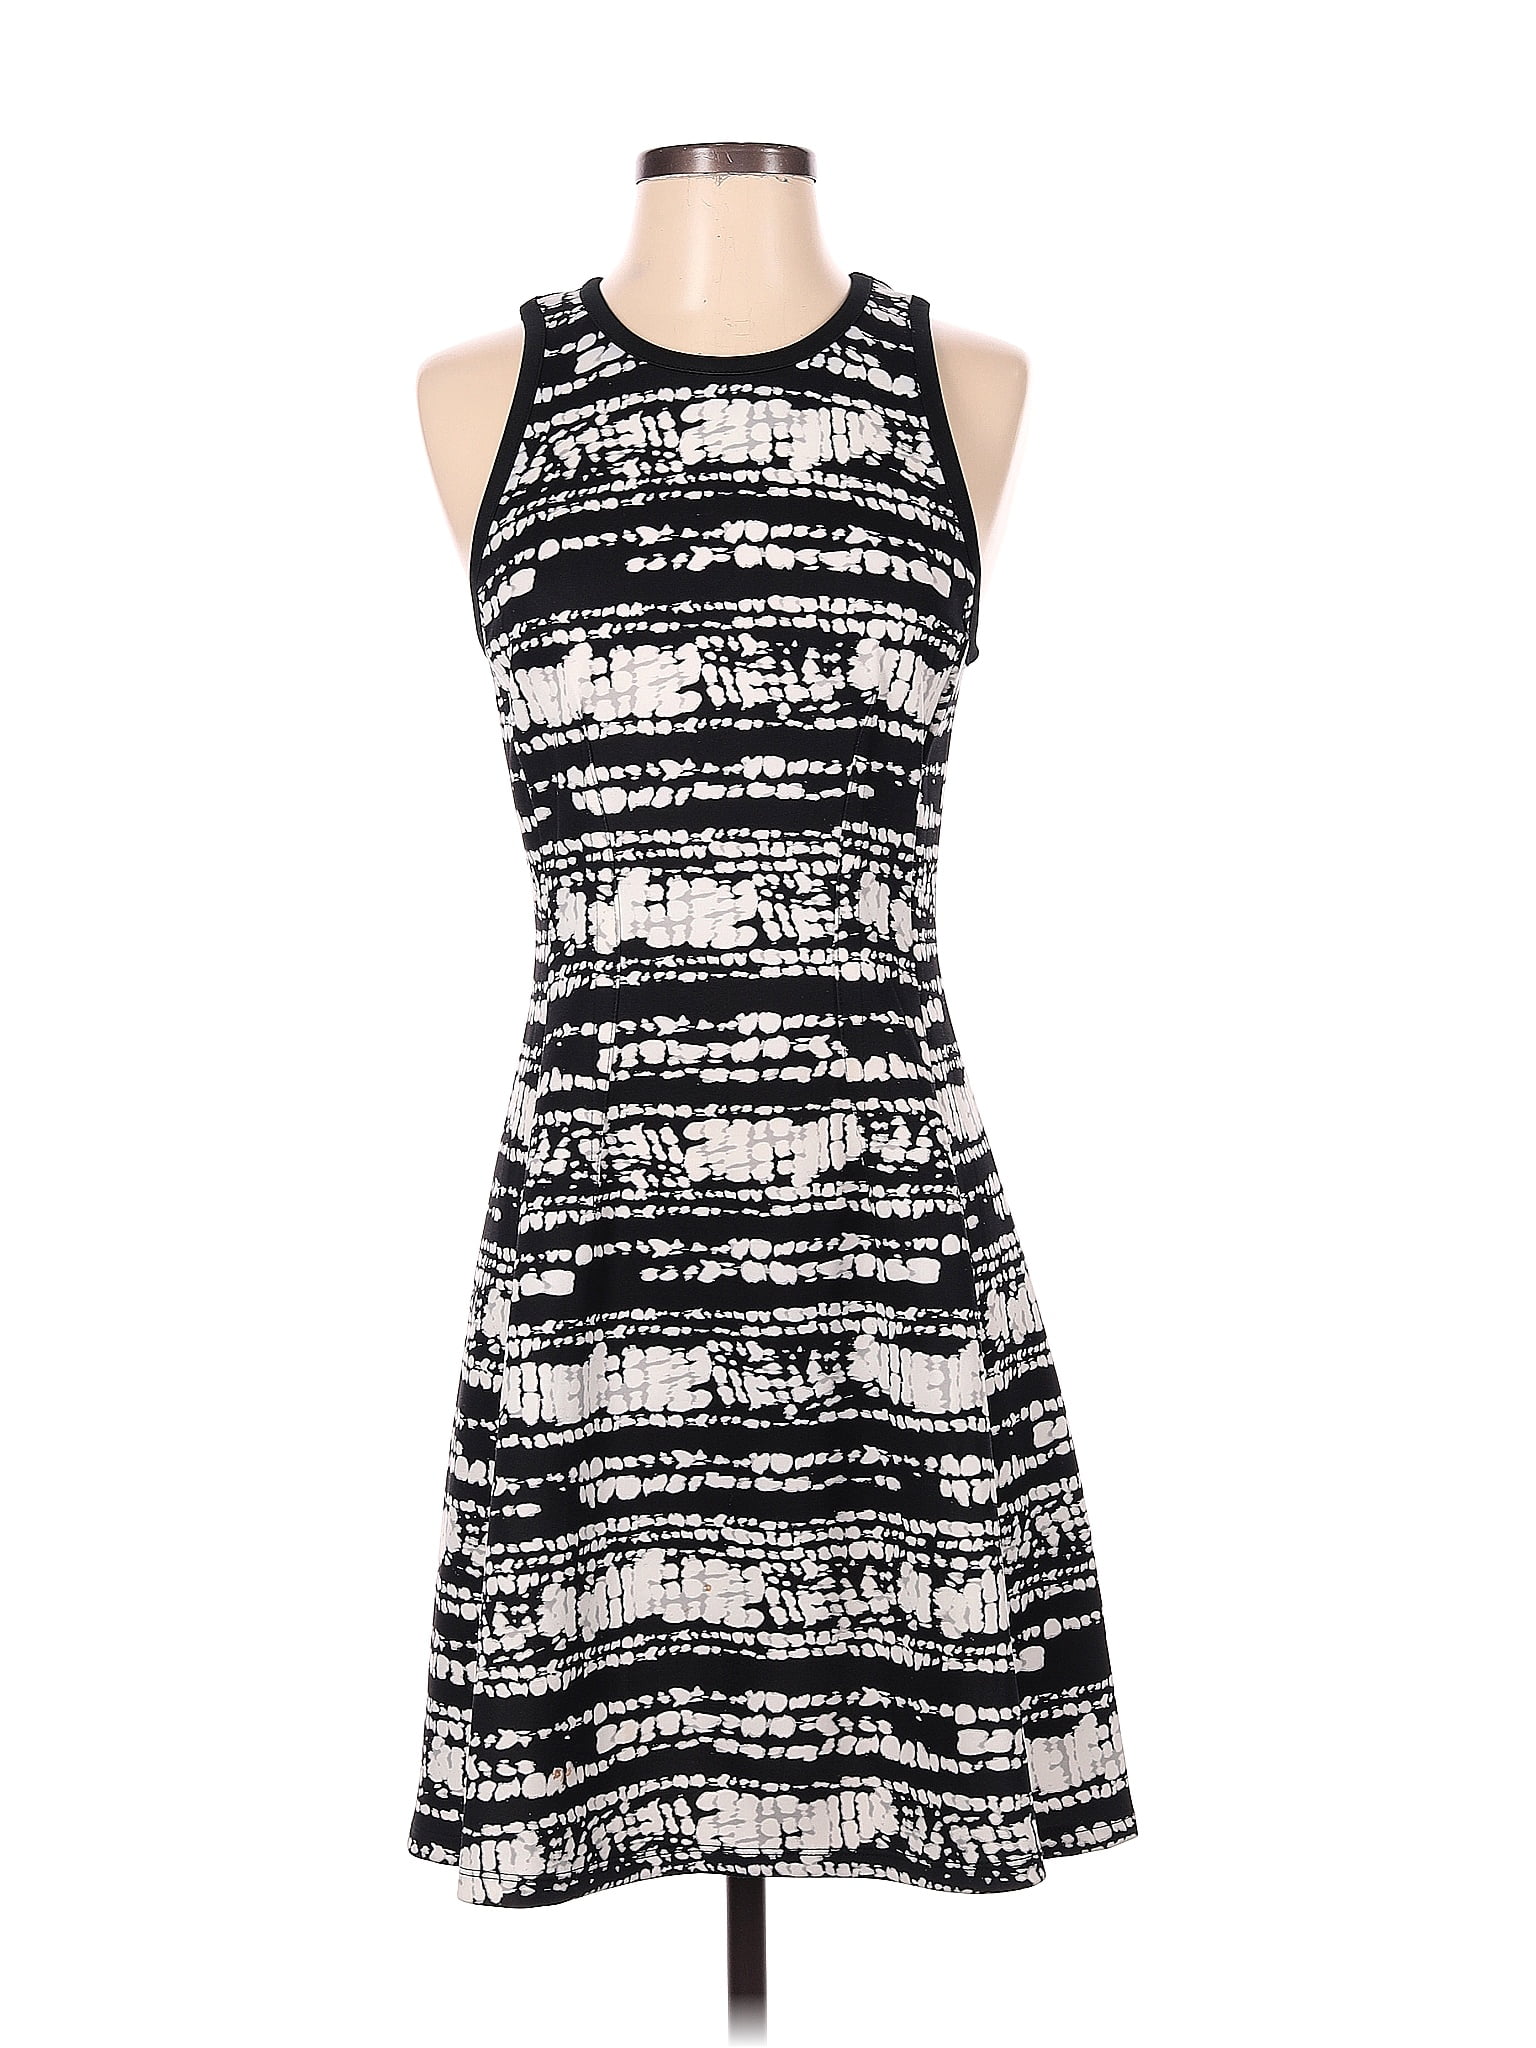 Mossimo Multi Color Black Casual Dress Size S - 56% off